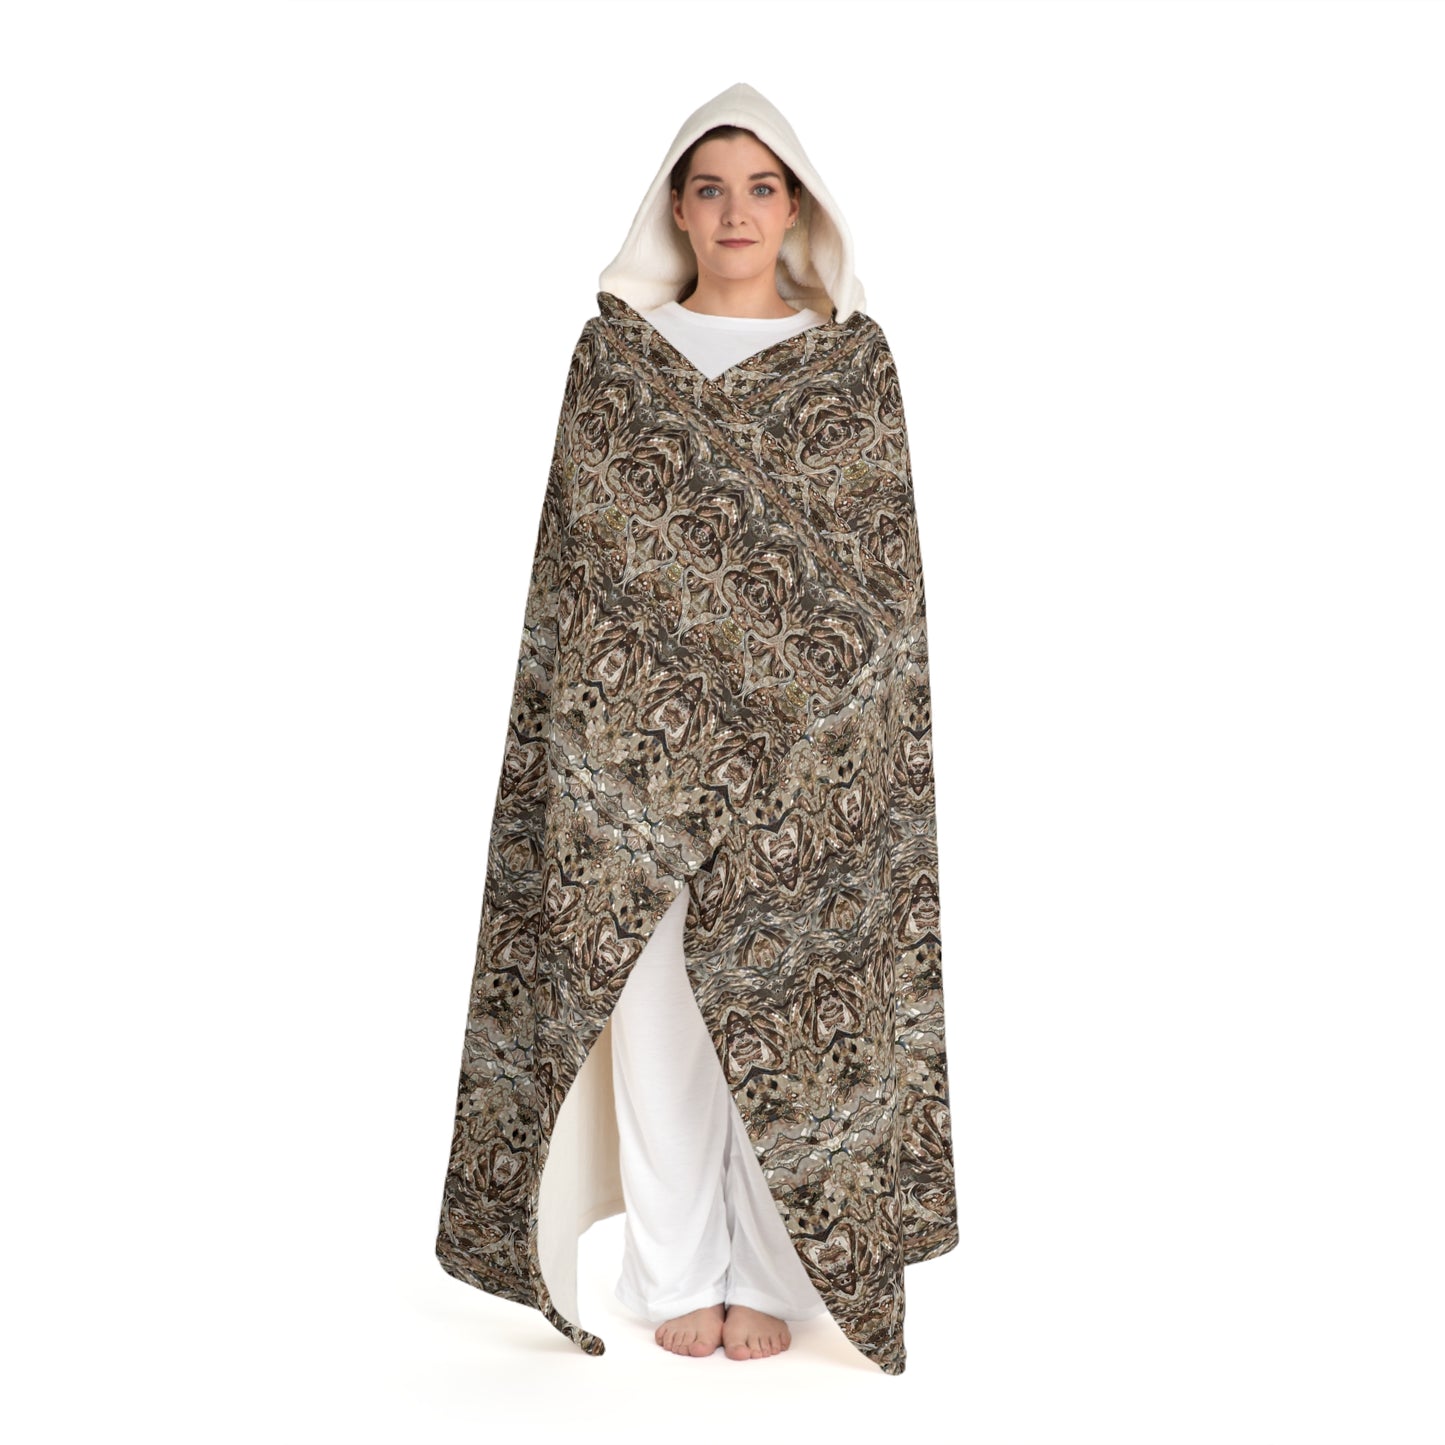 Cream Hooded Sherpa Fleece Blanket (Samhain Dream Thaw 15 of 15 Quindecim ex Quindecim) RJSTHw2023 RJS